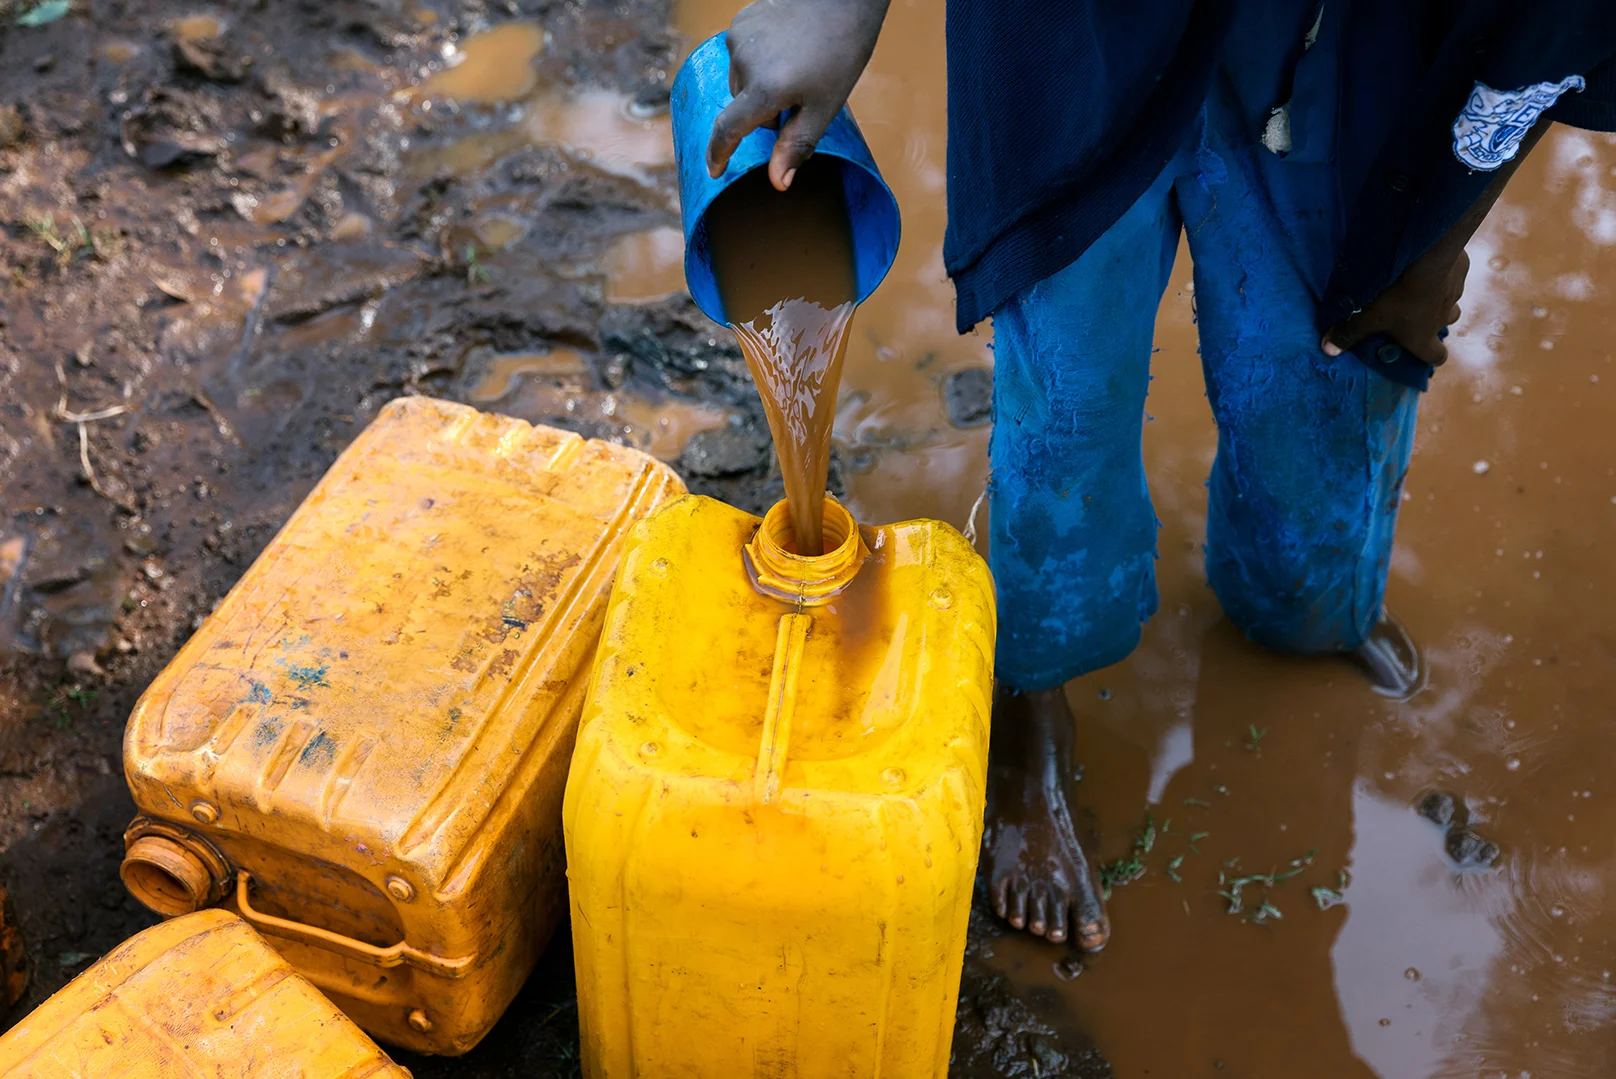 Water crisis in Ethiopia